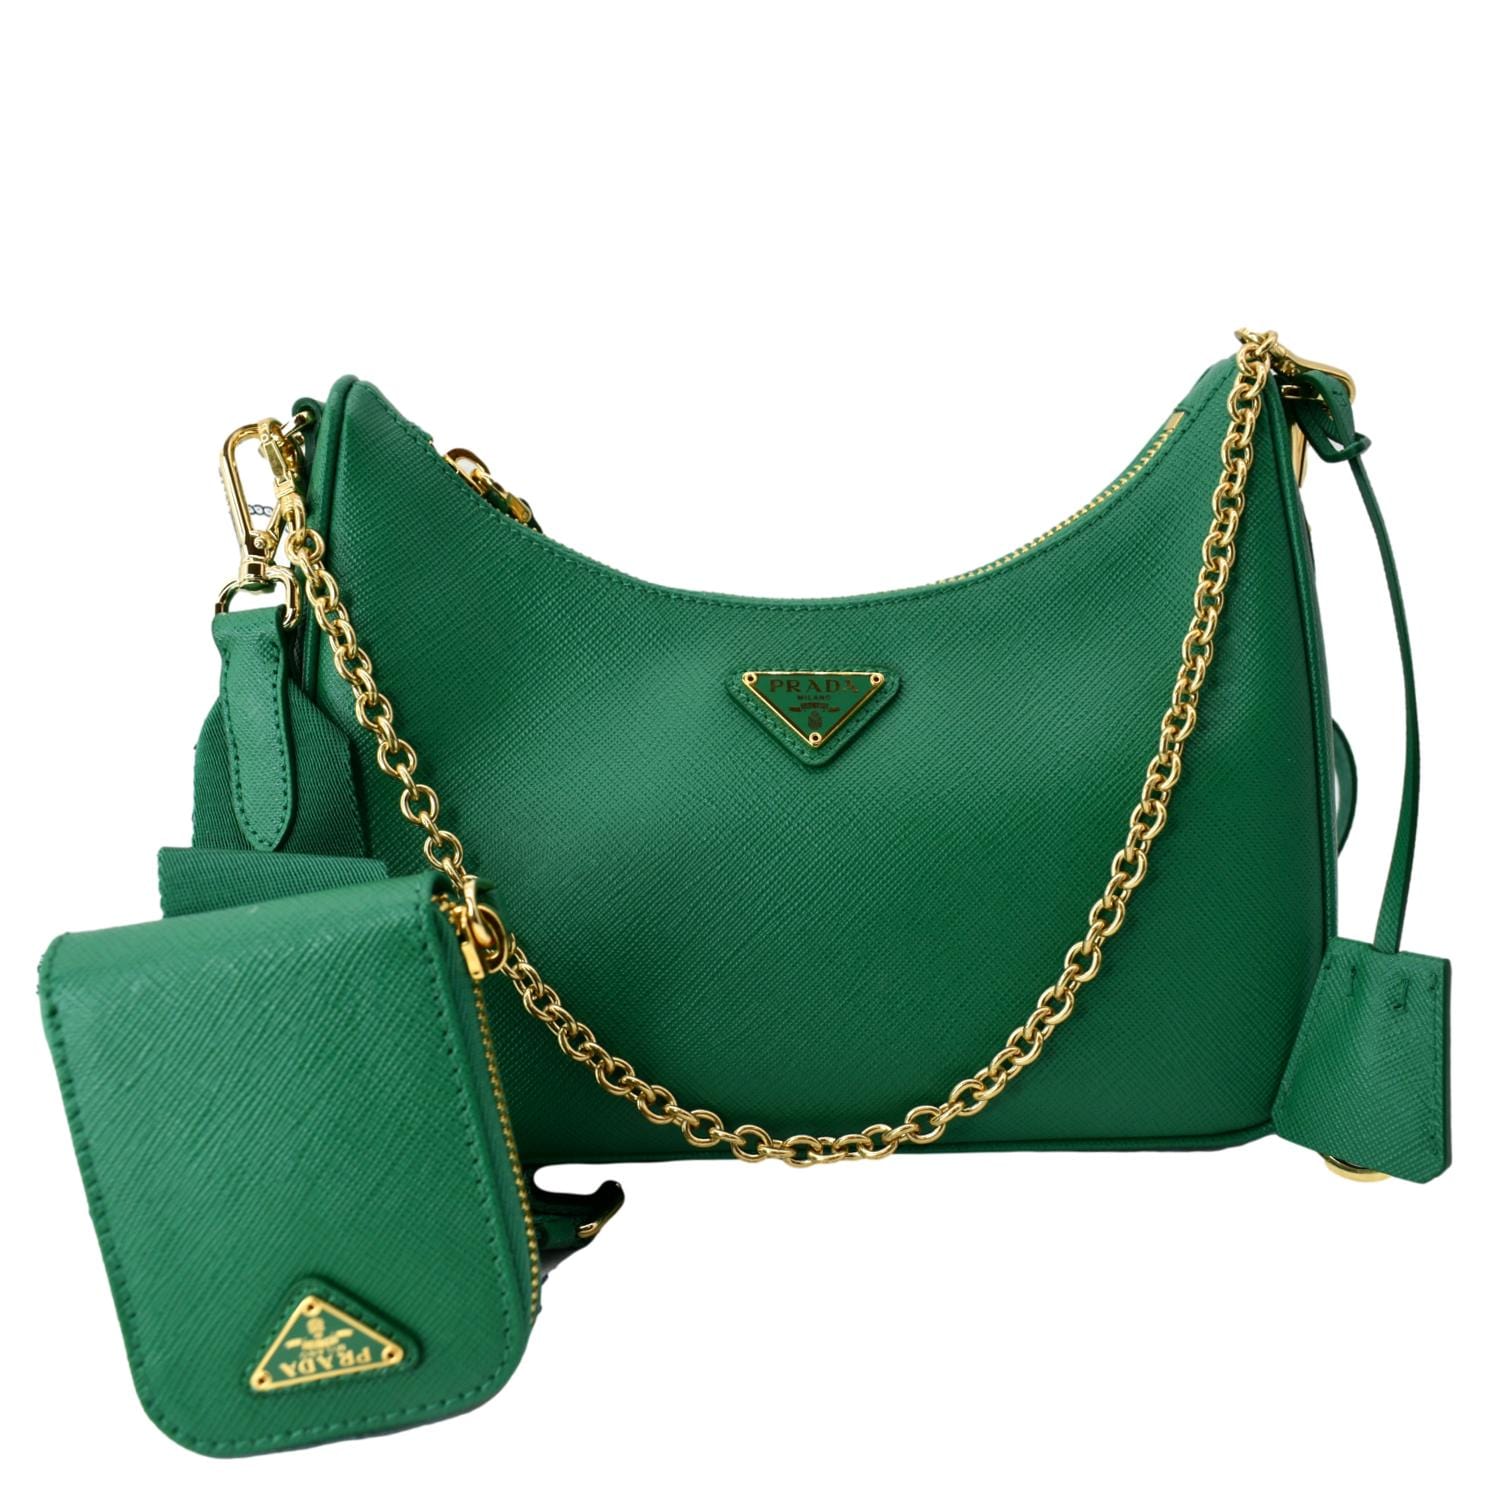 Prada Re-Edition 2005 Saffiano leather handbag in dark green